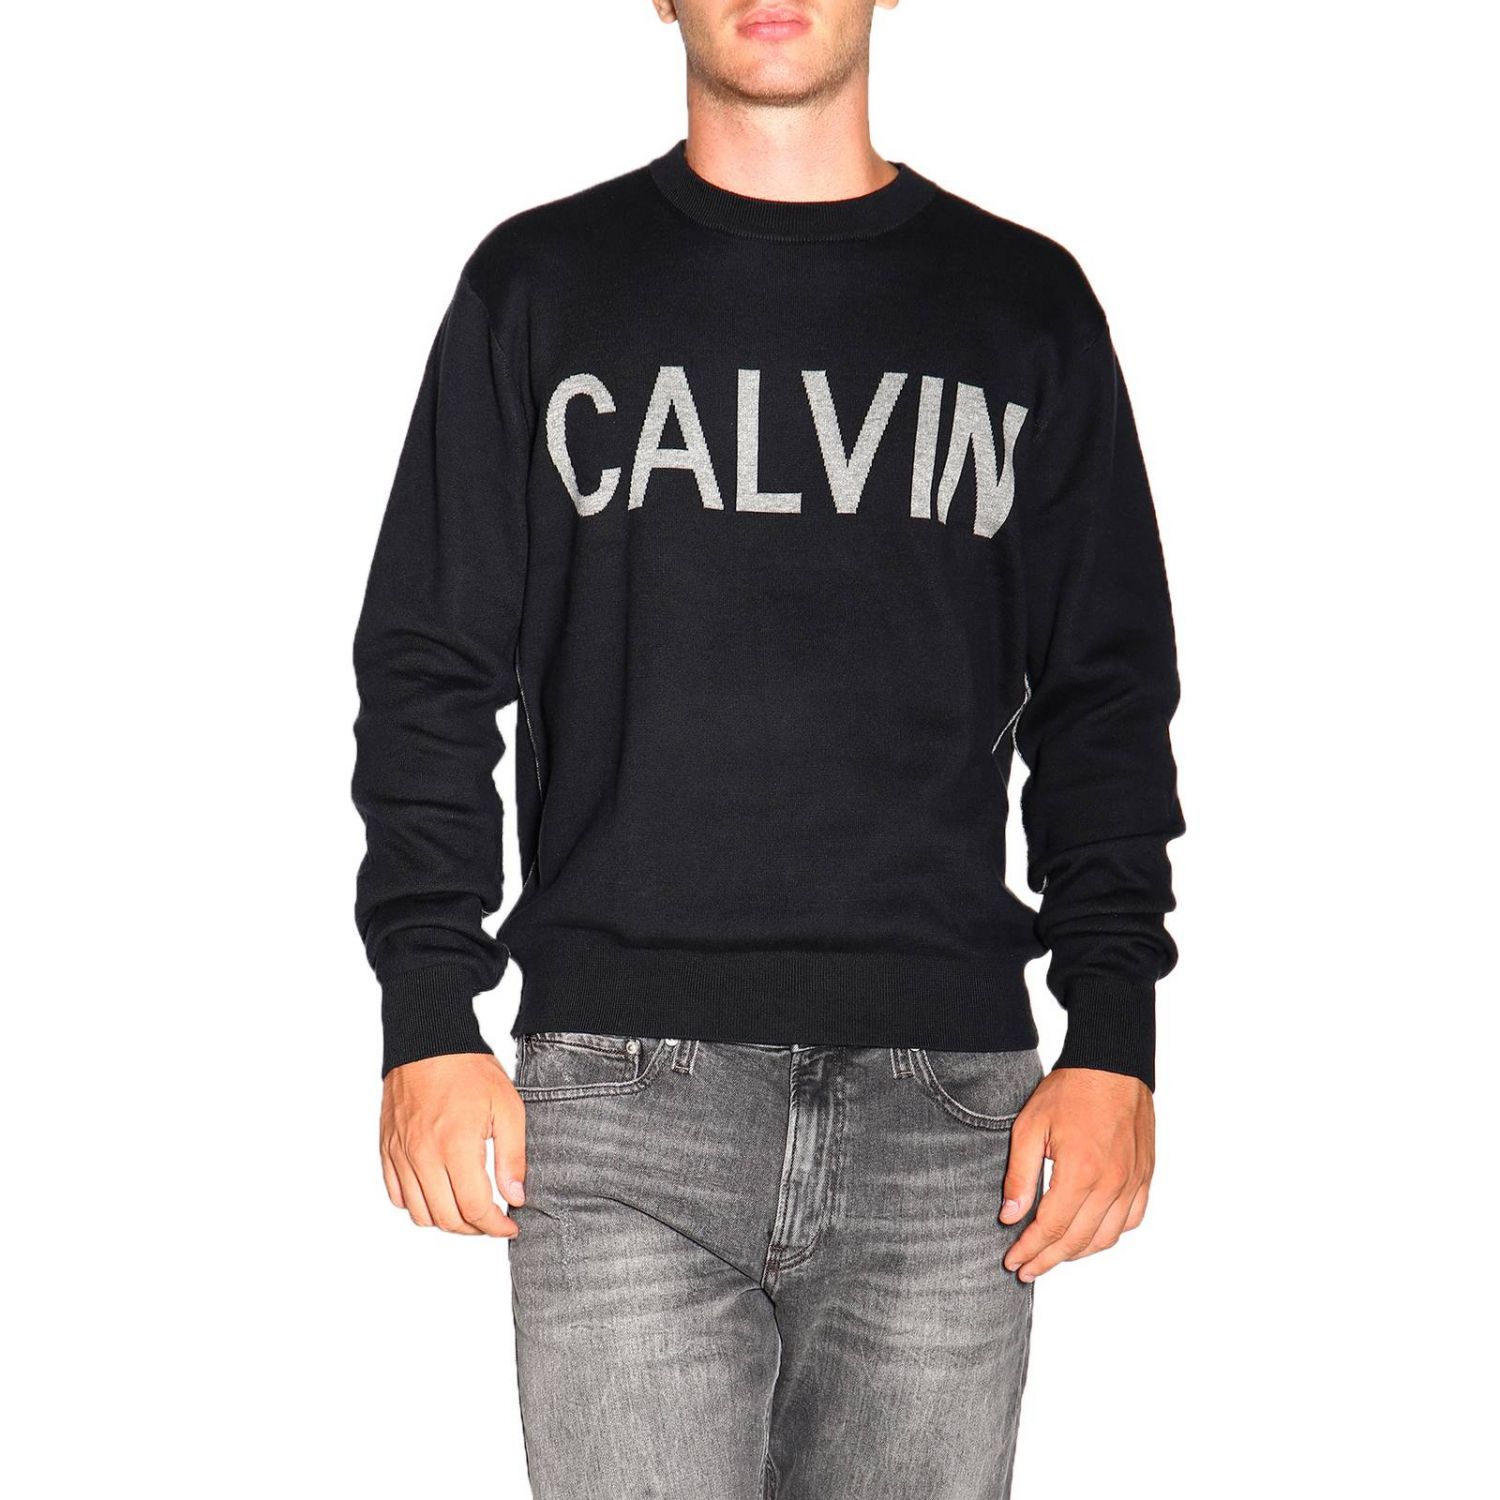 Calvin Klein Jeans Outlet: Sweater men | Sweater Calvin Klein Jeans Men ...